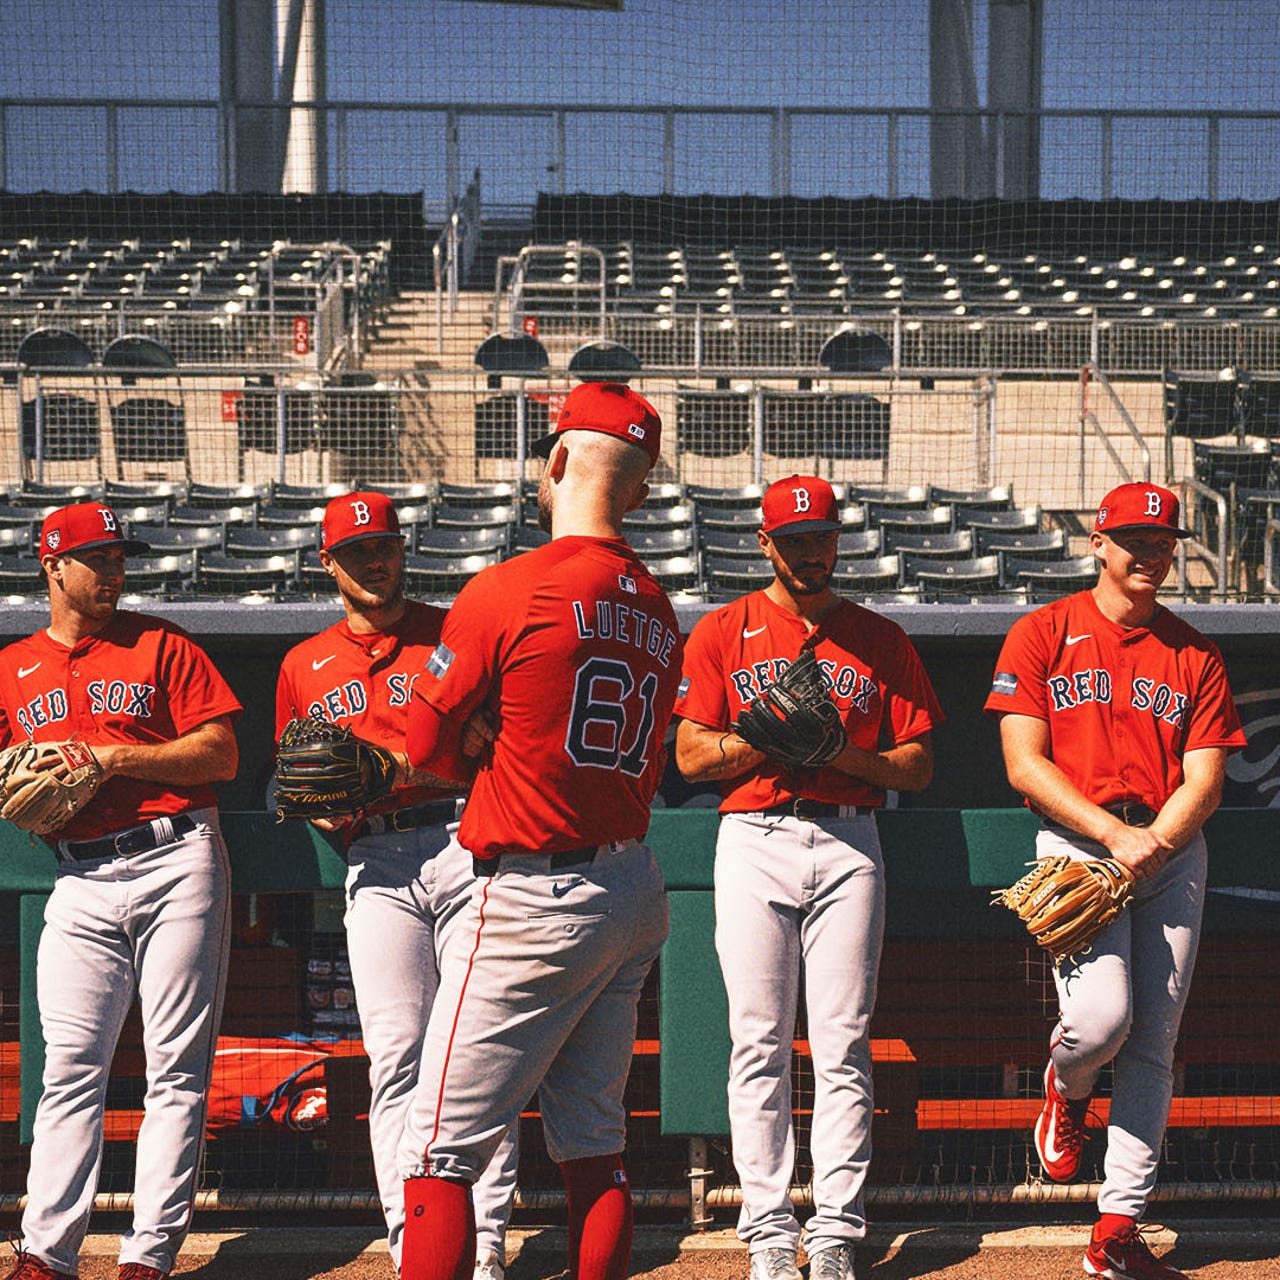 Everyone hates them': see-through pants add to MLB's uniform